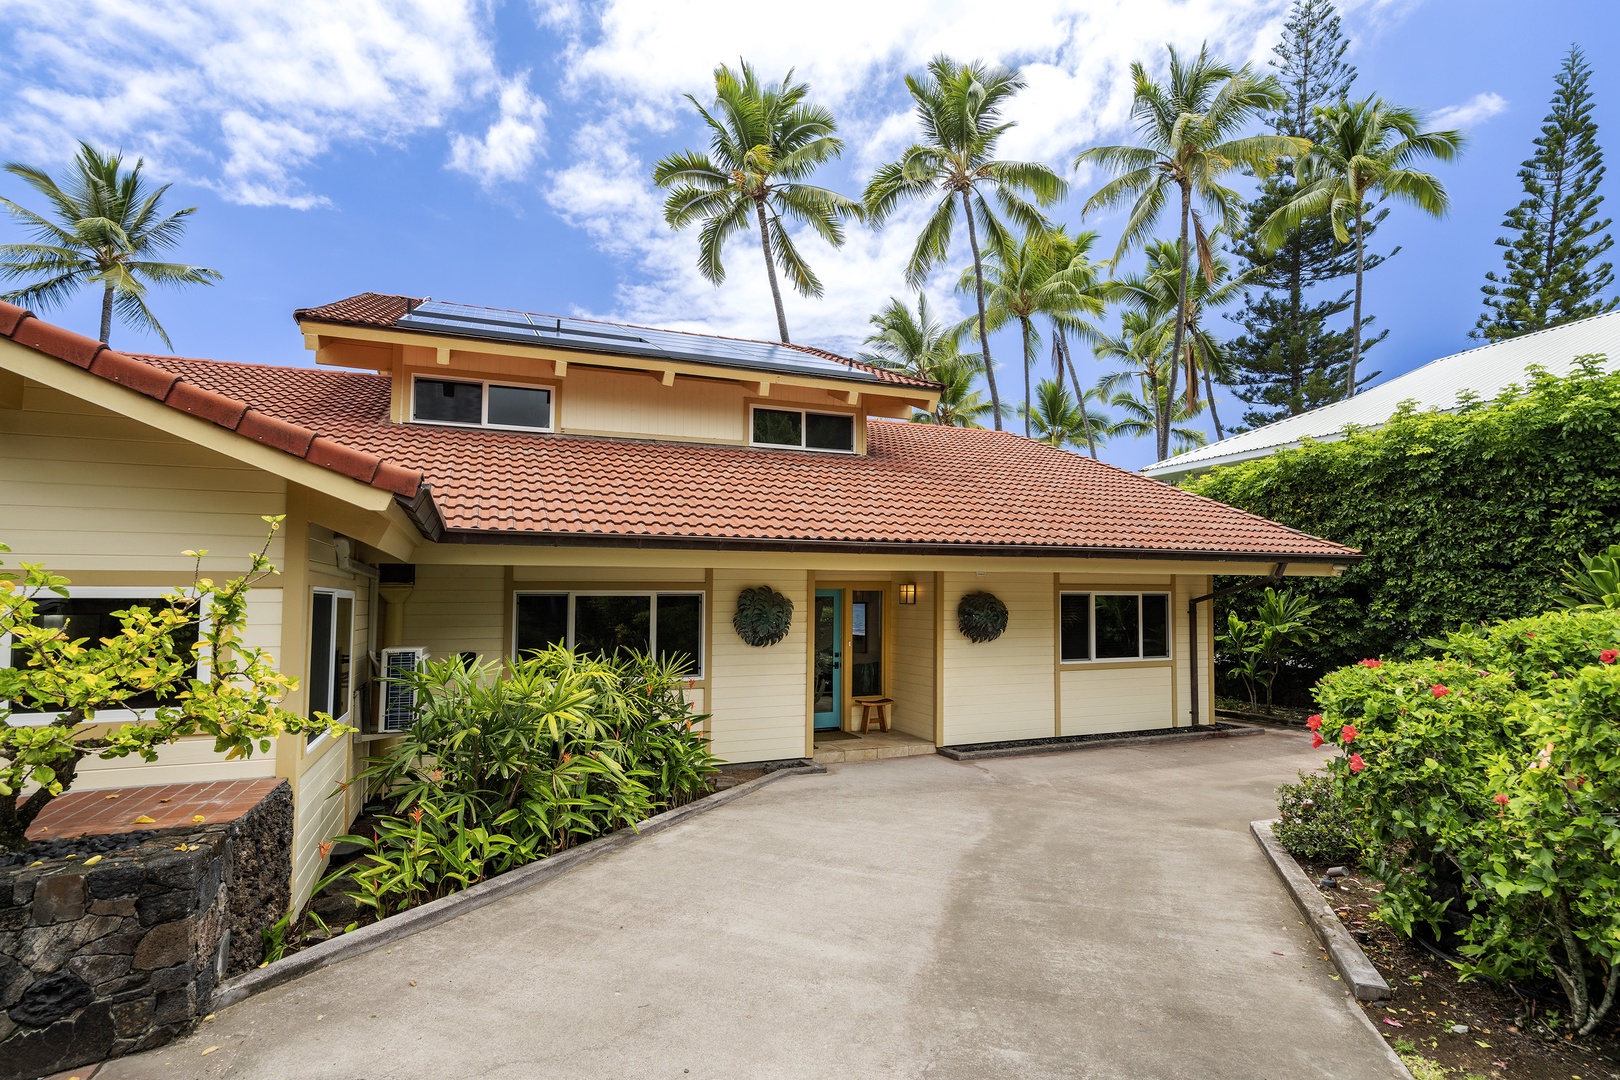 Kailua Kona Vacation Rentals, Hale Pua - Front of the home